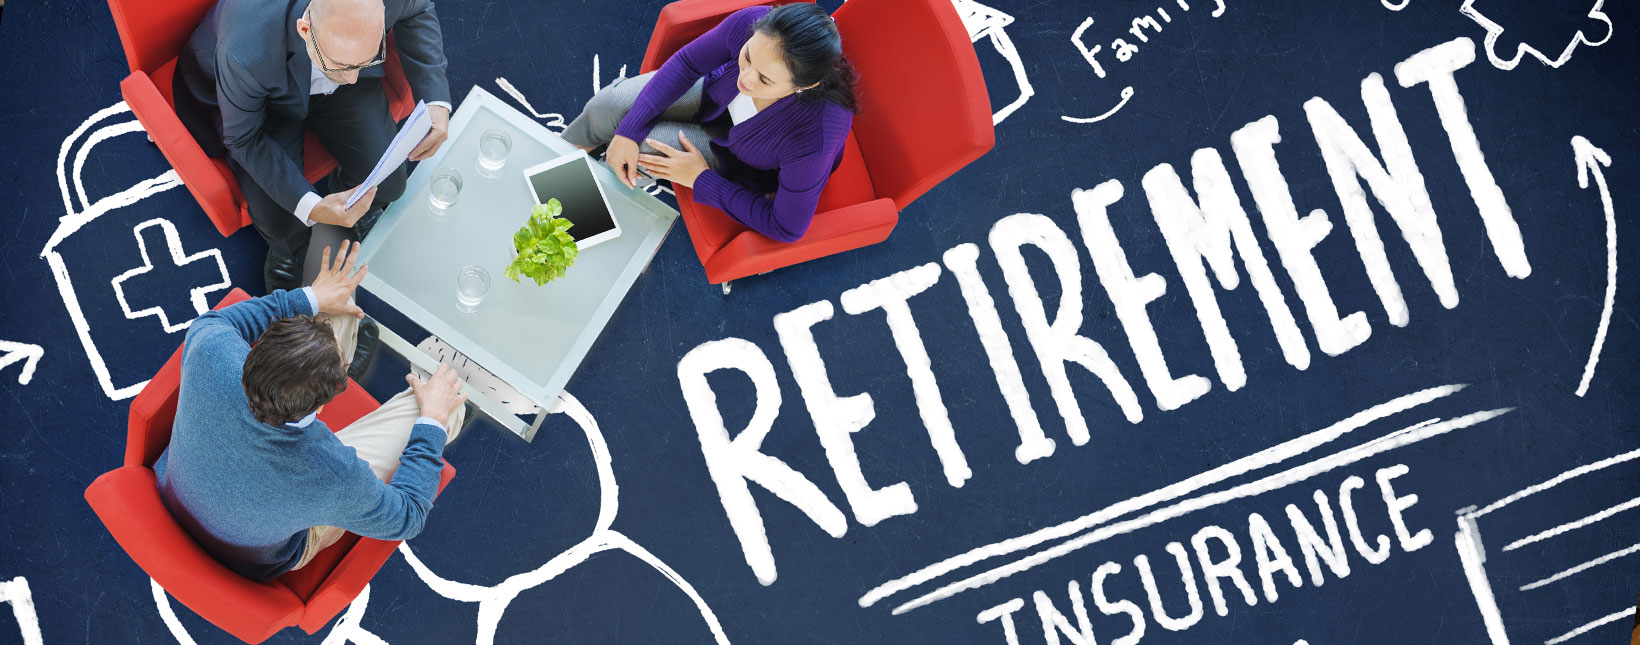 retirement benefits concept